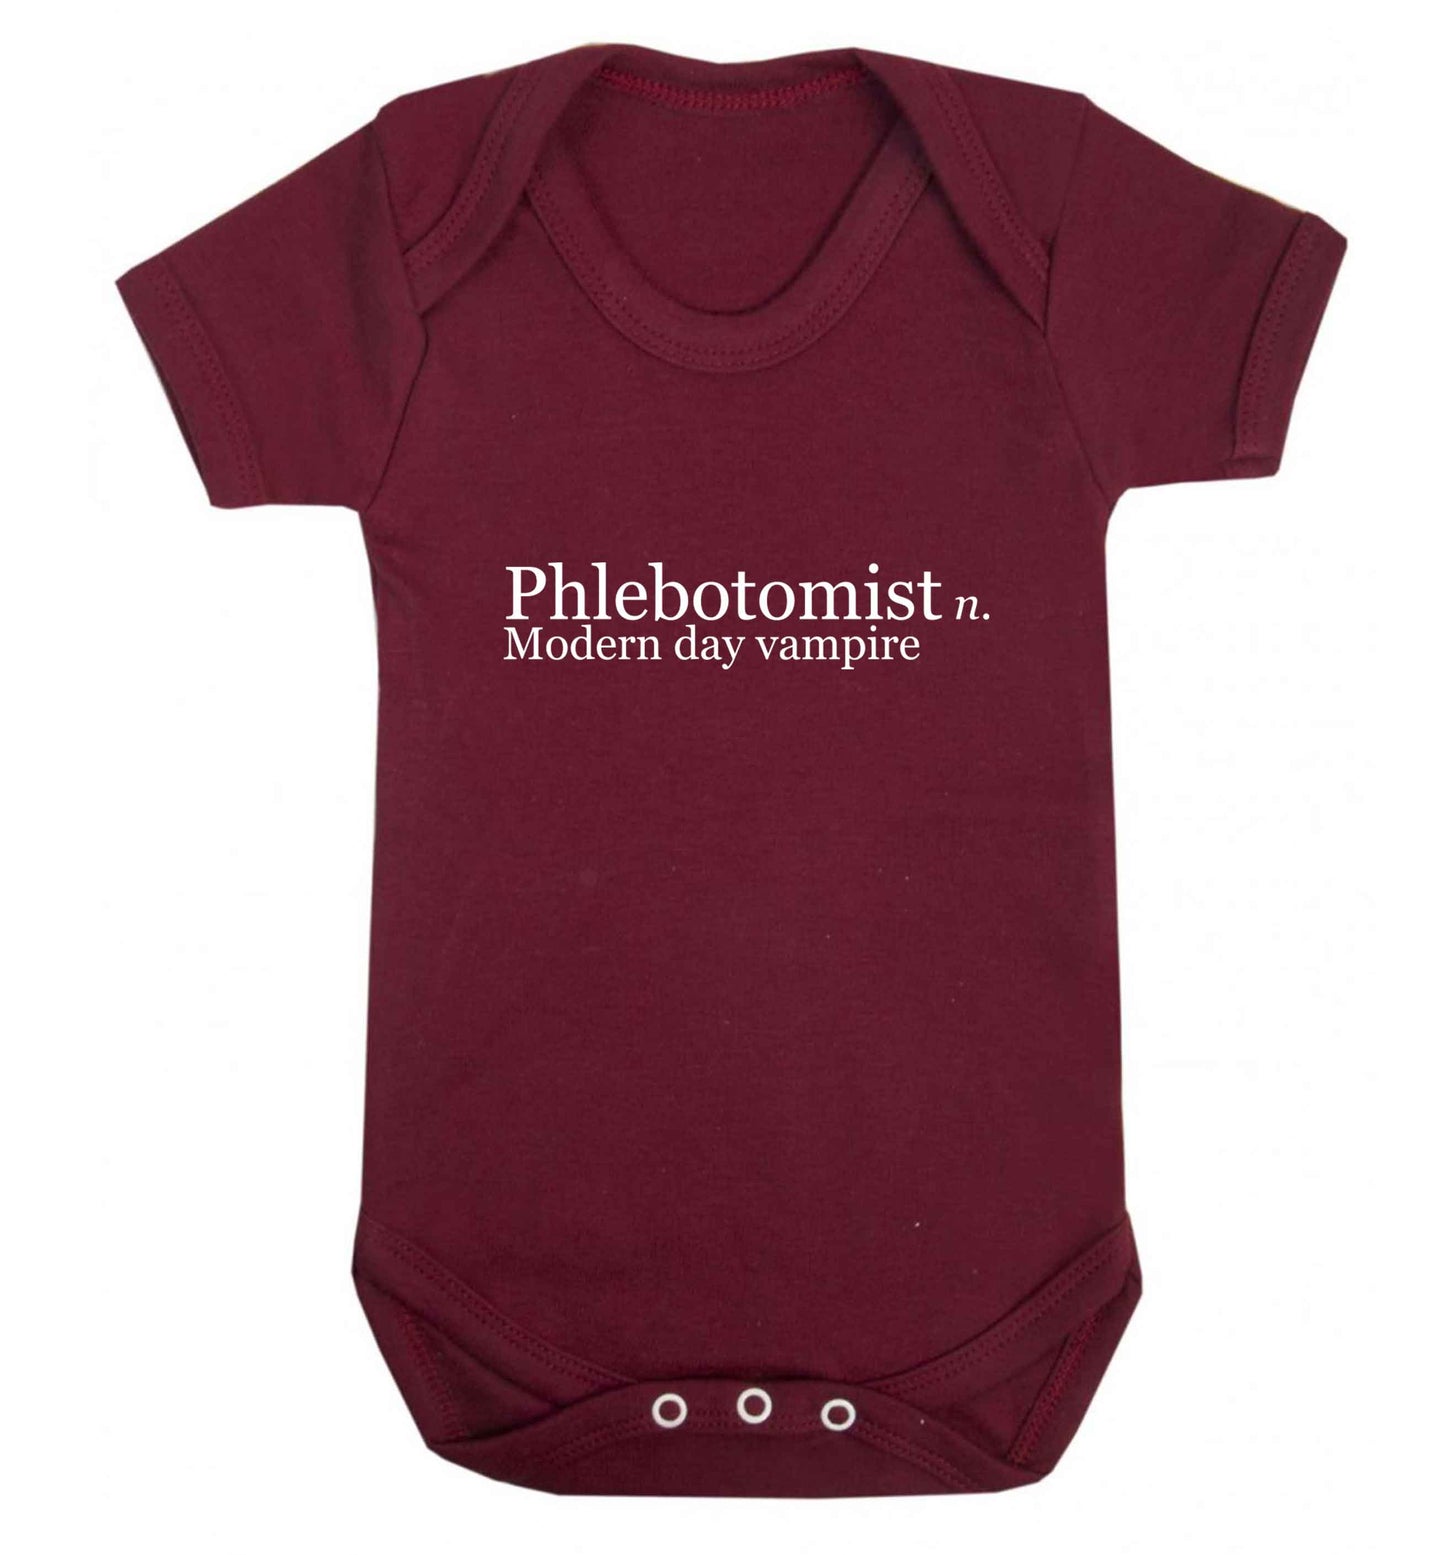 Phlebotomist - Modern day vampire baby vest maroon 18-24 months